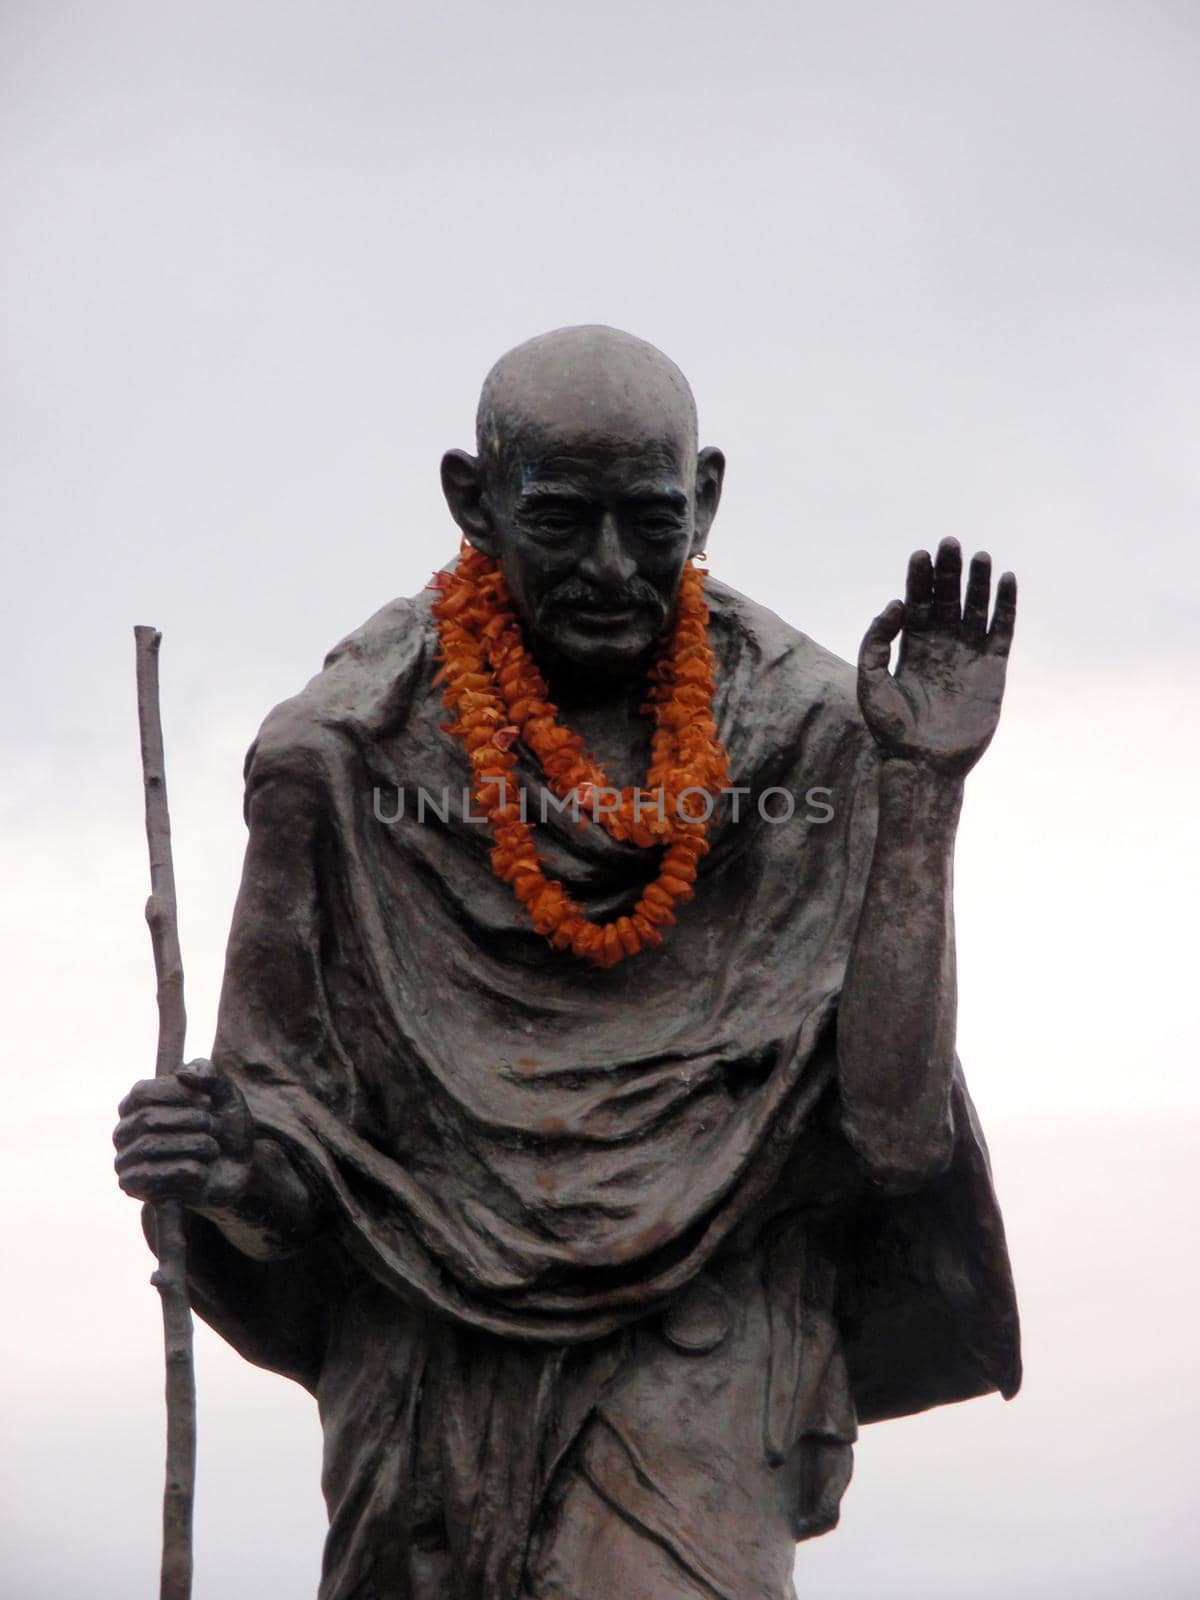 Statue of Ghandi wearing an orange lei in the Embarcadero center, San Francisco, California